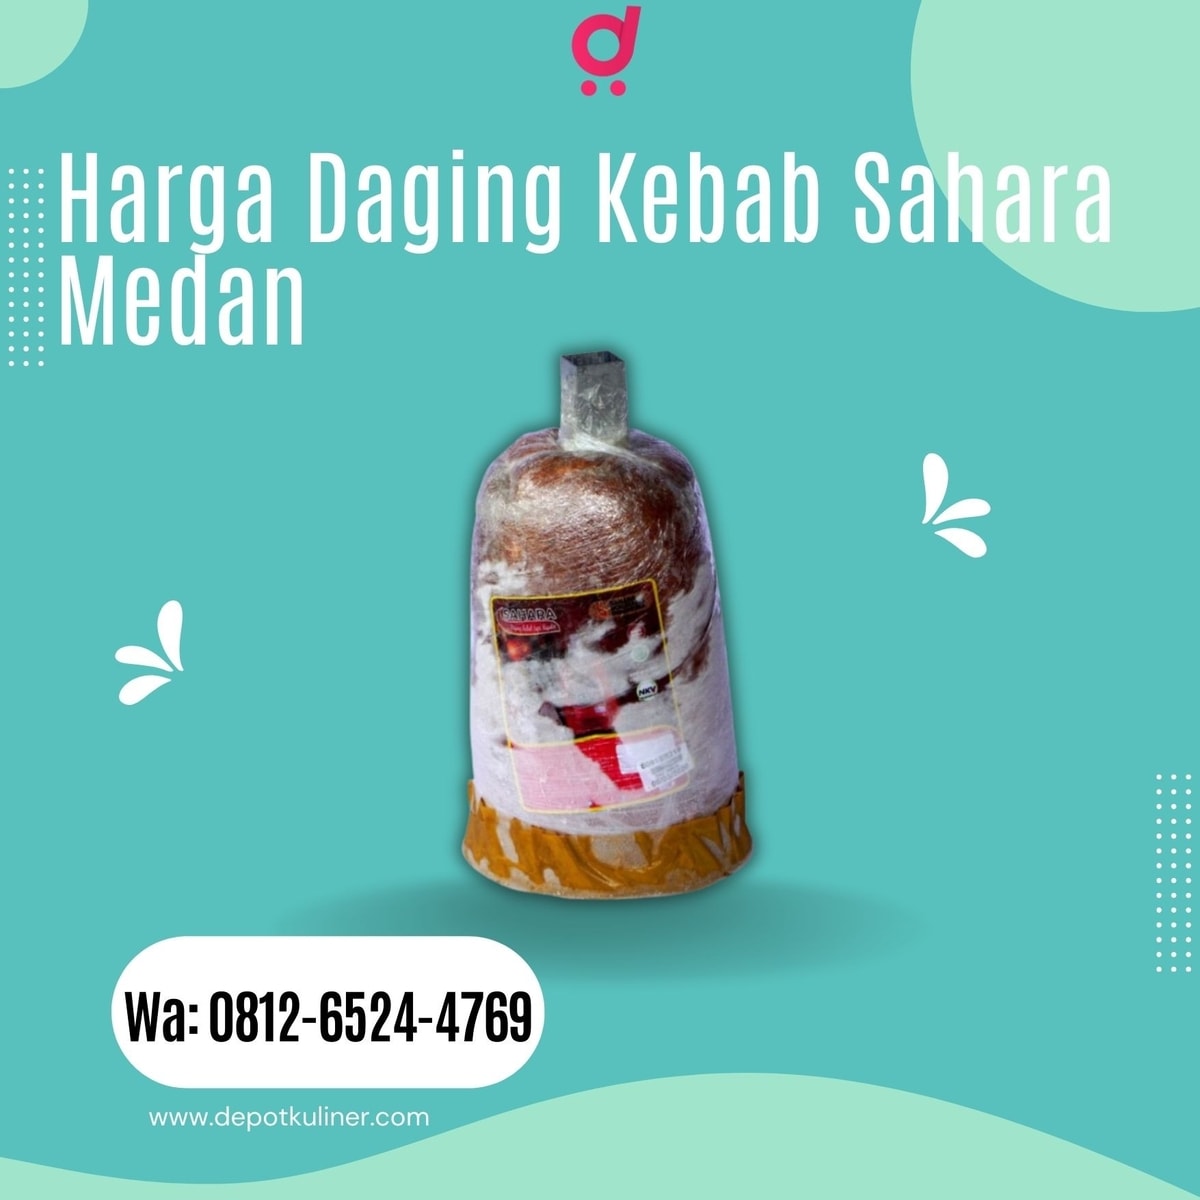 DISTRIBUTOR LANGSUNG, Call 0812-6524-4769, Harga Daging Kebab Sahara Medan